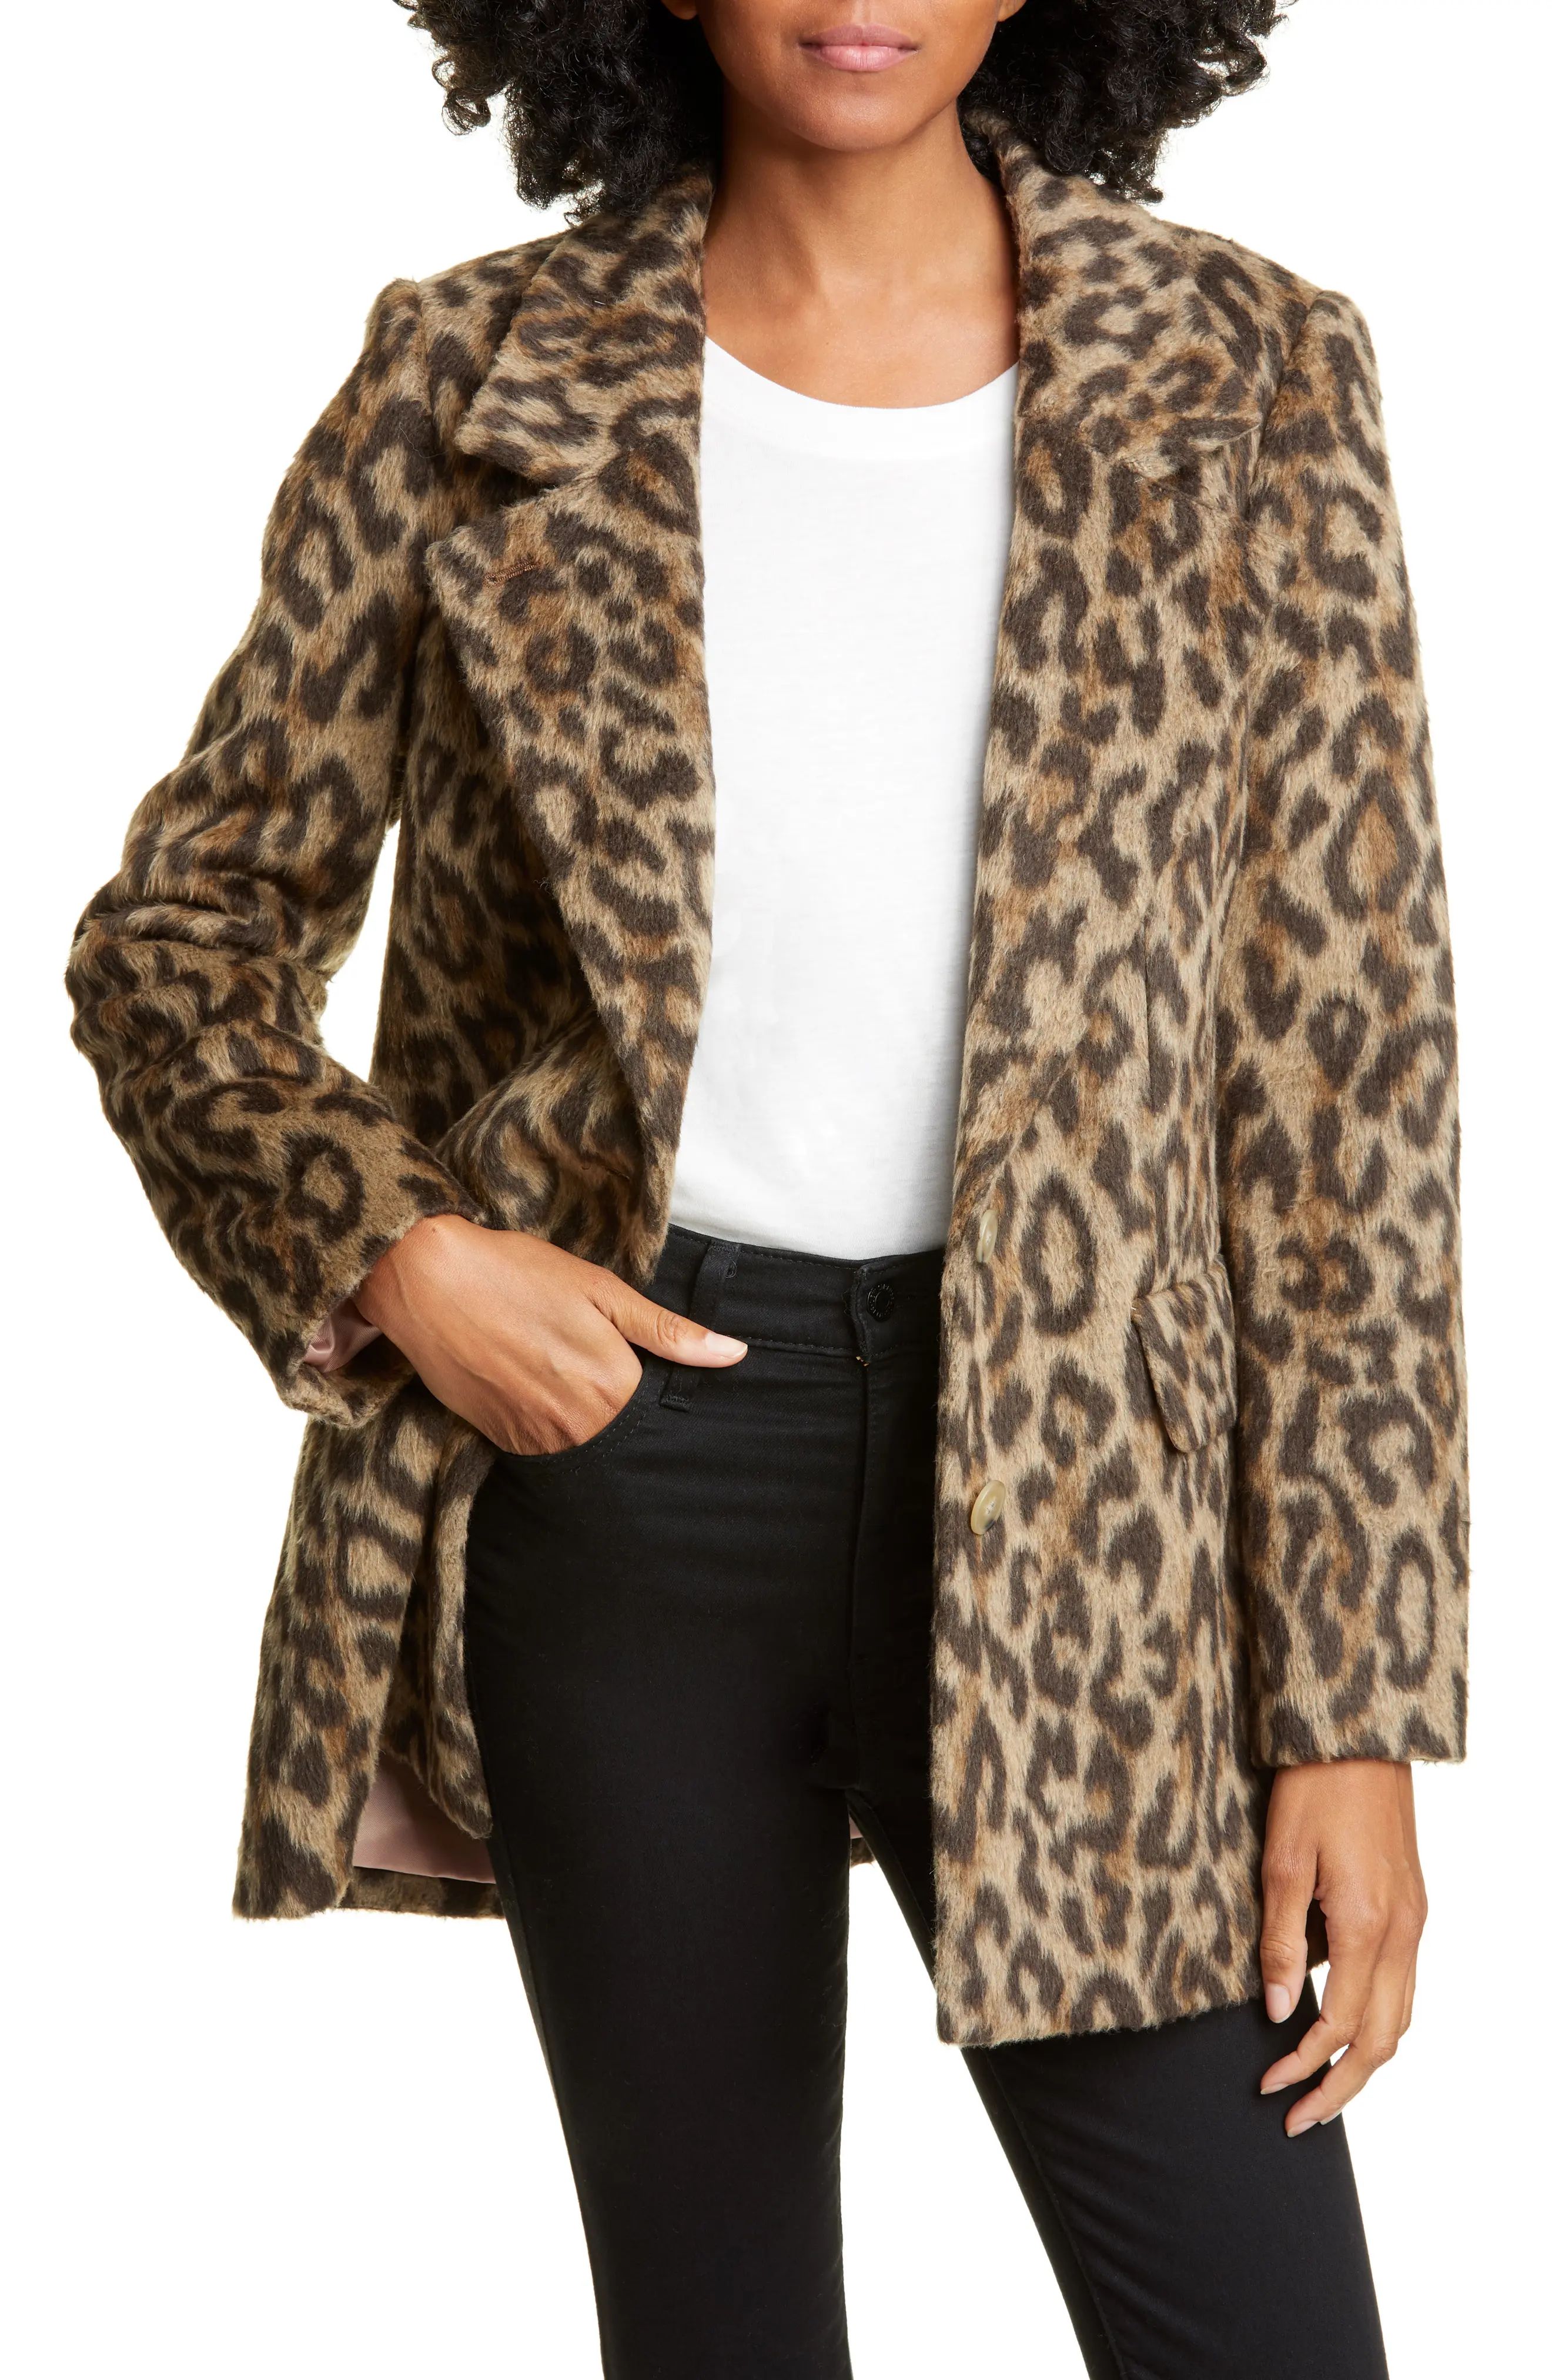 Rebecca Taylor Leopard Print Faux Fur Coat at Nordstrom Rack | Hautelook